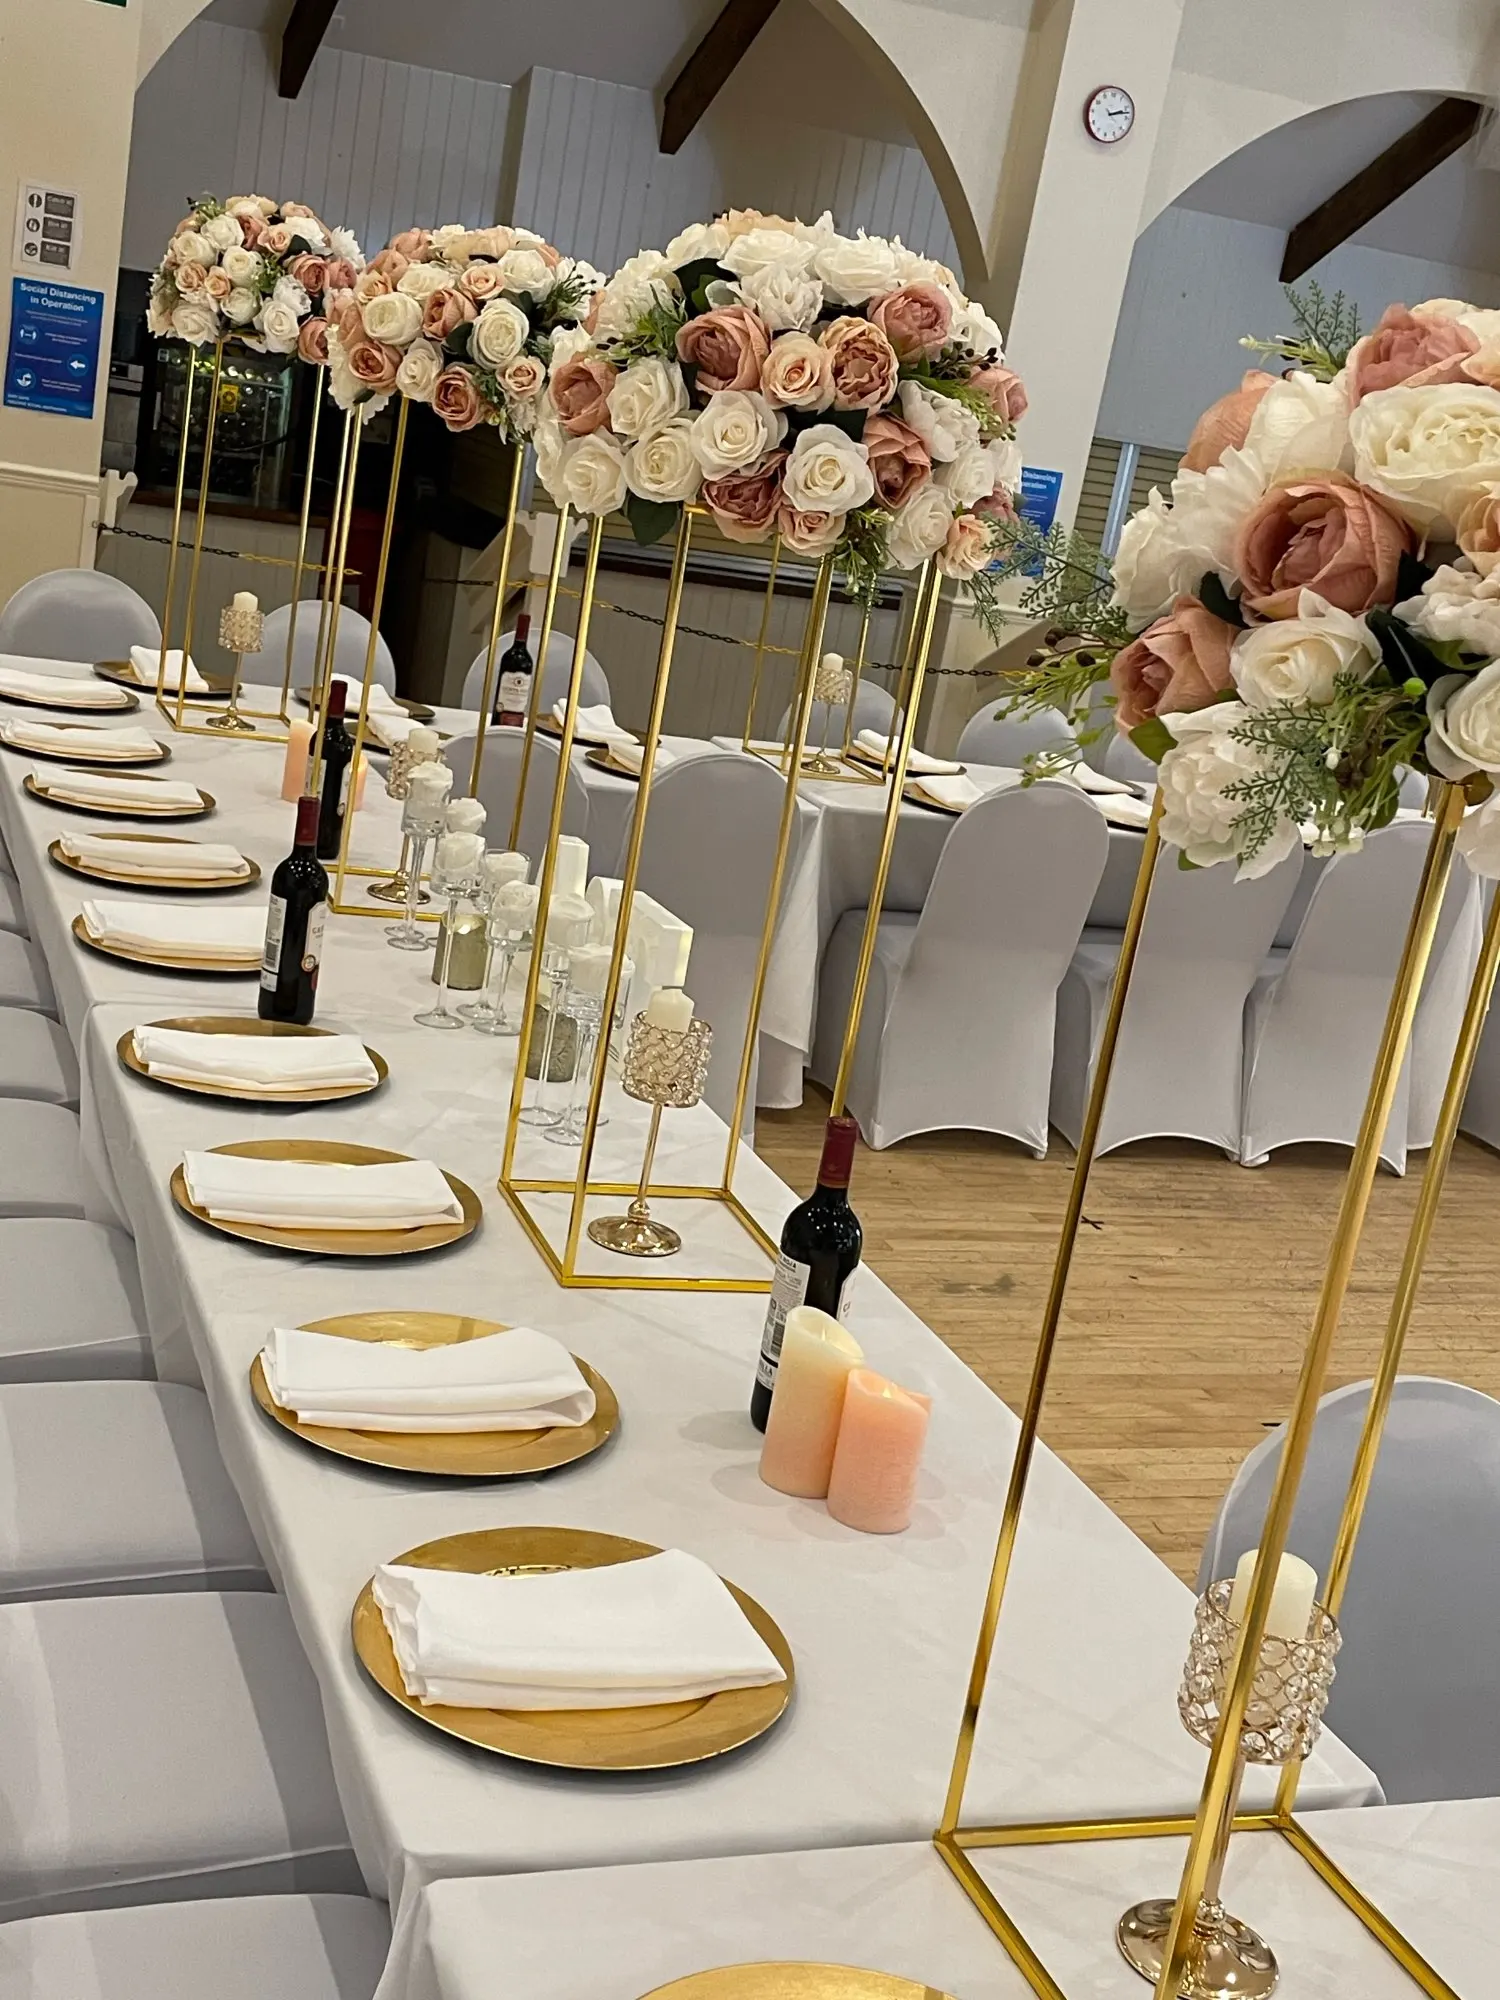 

10pcs Gold Flower Vase Floor Vases Column Stand Metal Road Lead Wedding Table Centerpiece Flower Rack Event Party Decorat